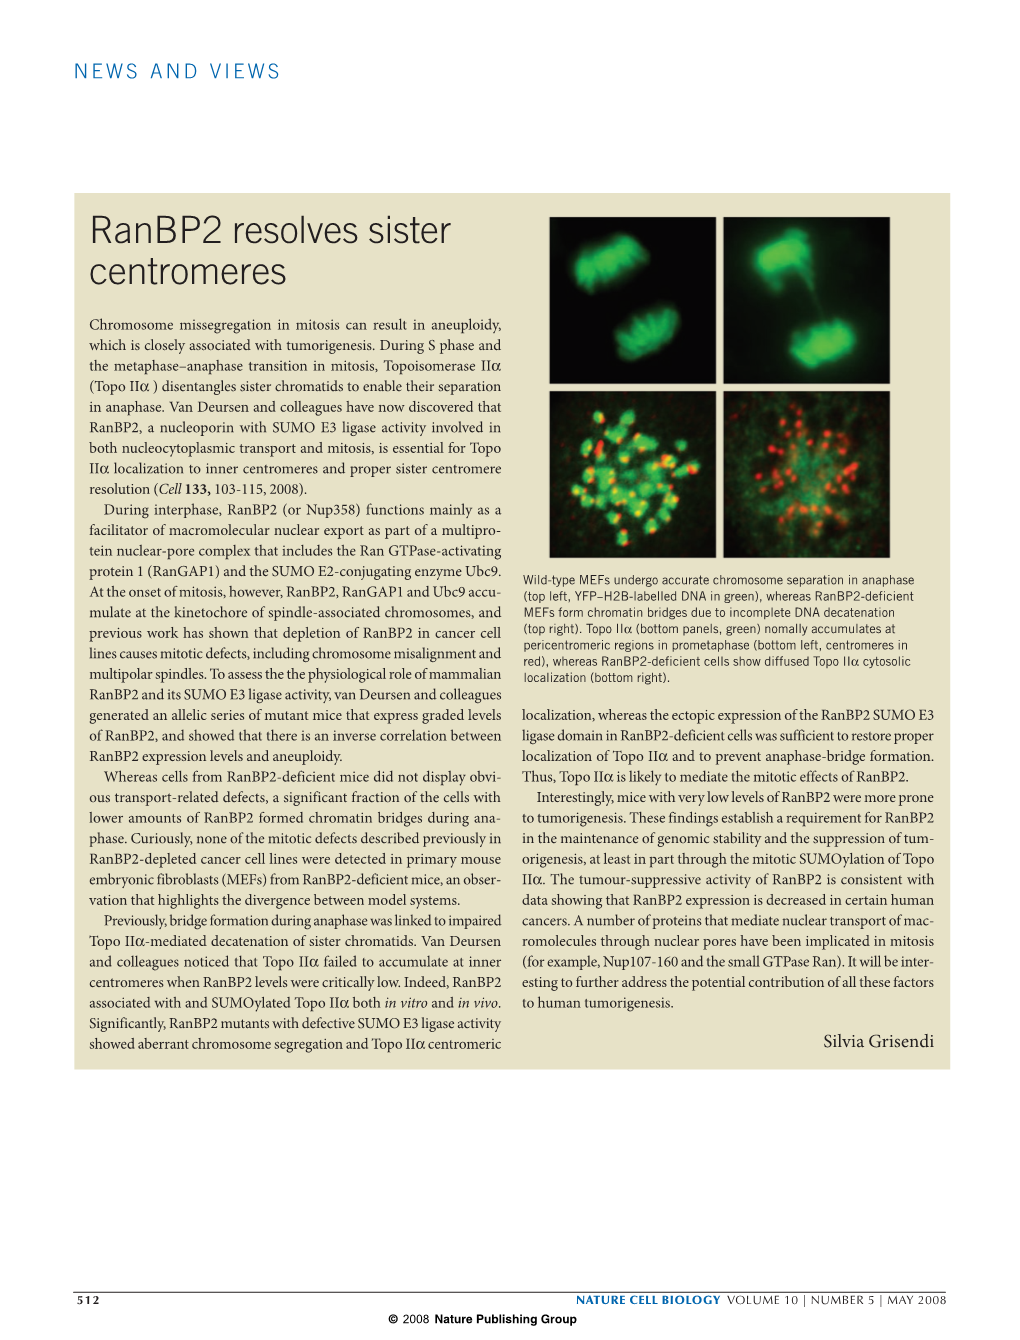 Ranbp2 Resolves Sister Centromeres